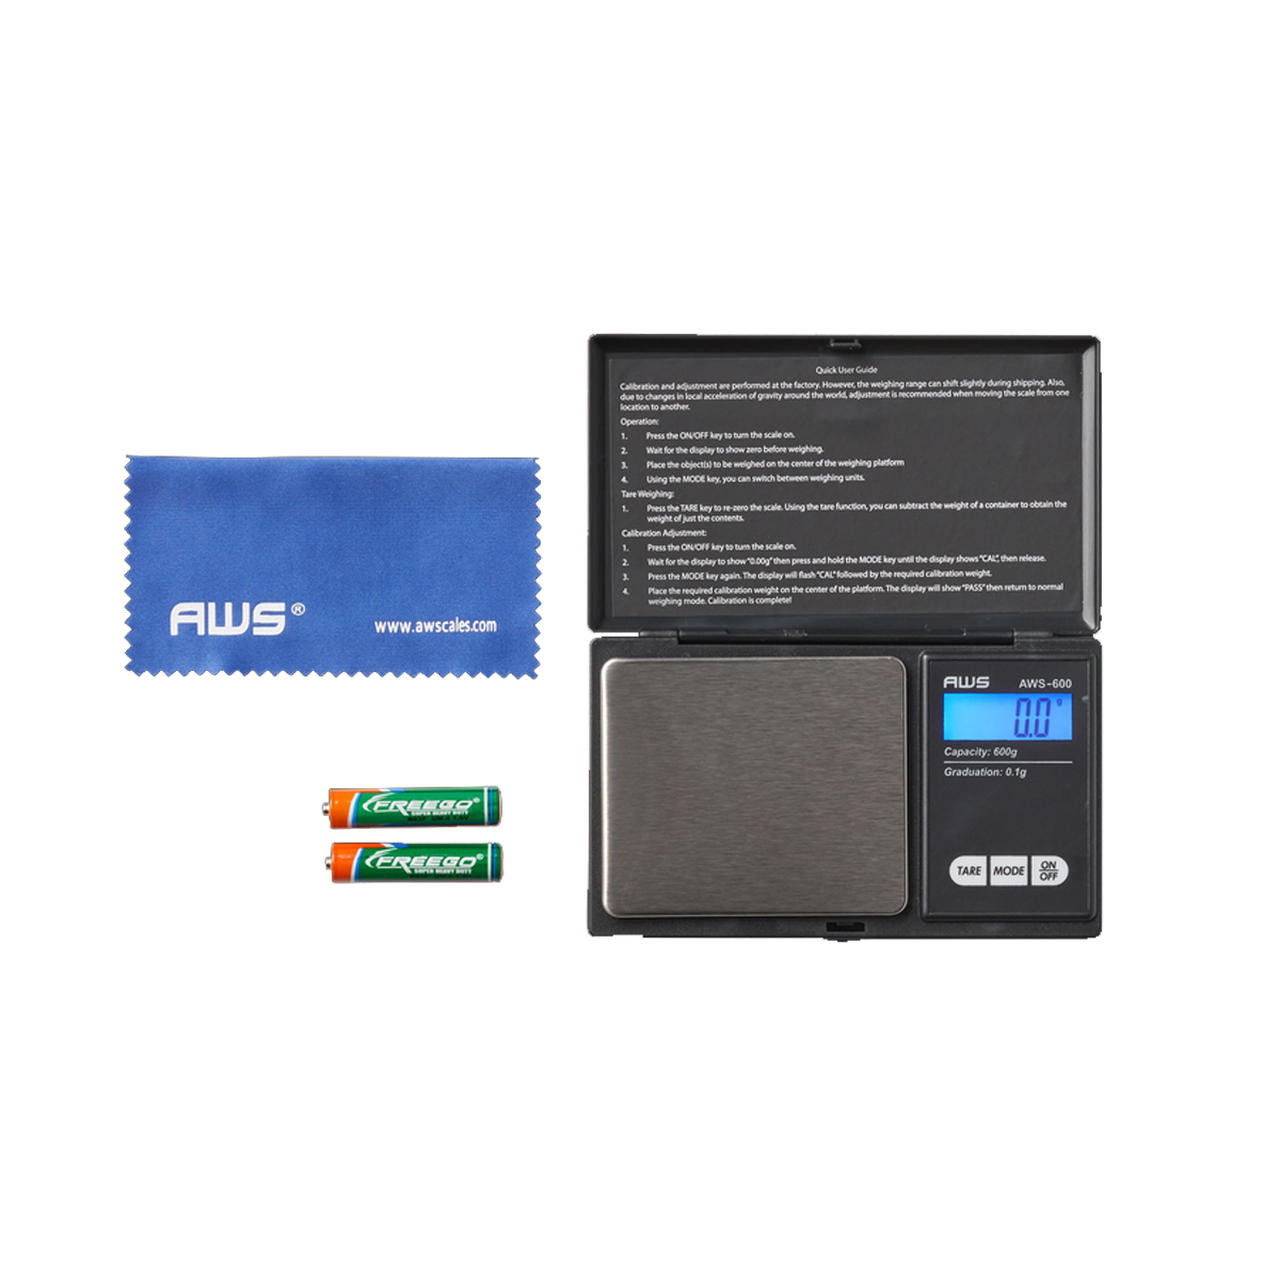 600 Gram Digital Portable Scale x 0.1, MEAS-0046